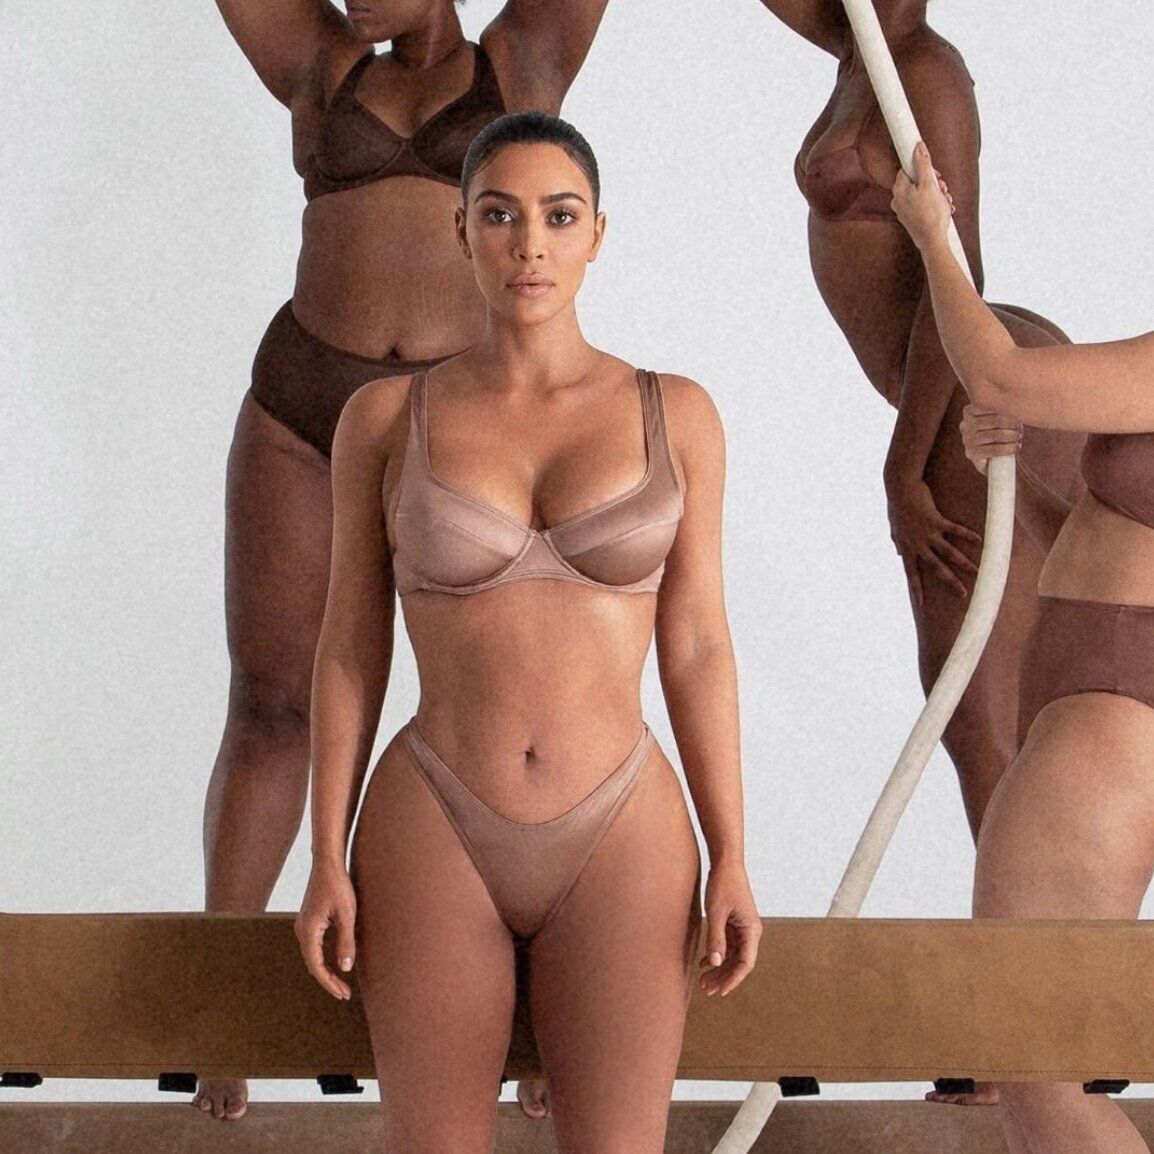 SKIMS - Kim Kardashian West wears the SKIMS BODY Bralette